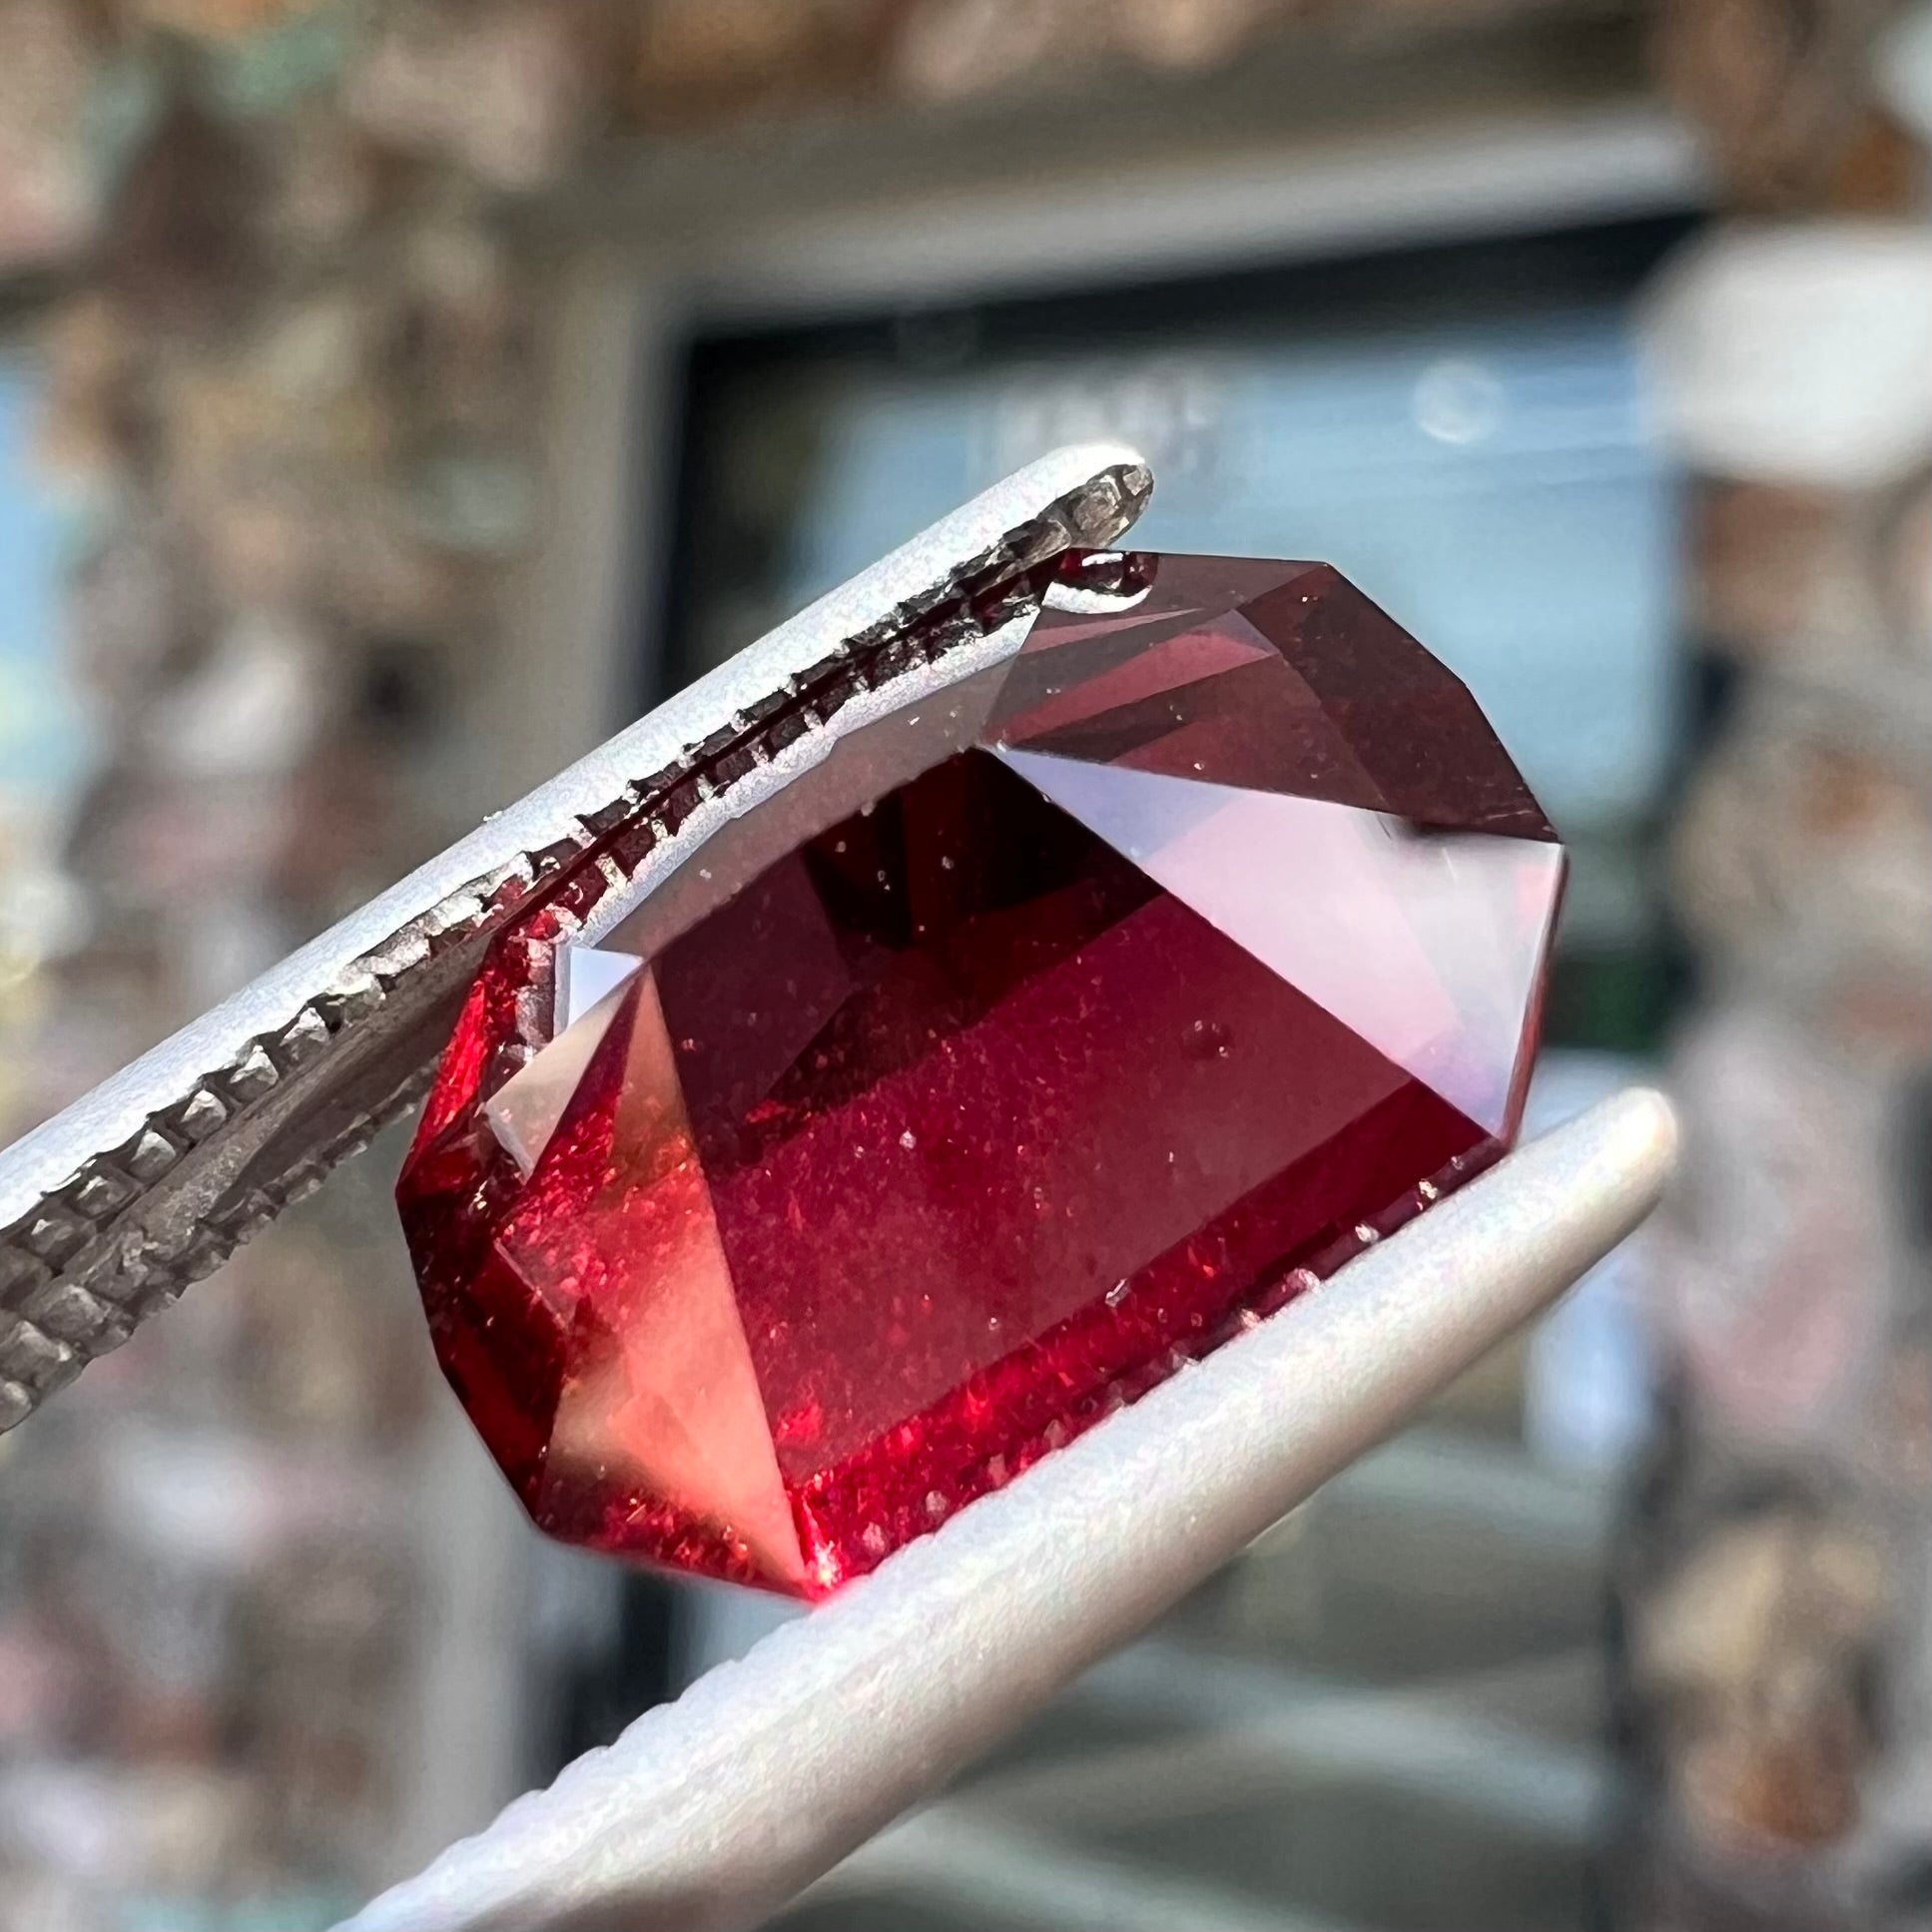 A loose, octagon cut rhodolite garnet gemstone.  The stone is a deep, purplish crimson red color.